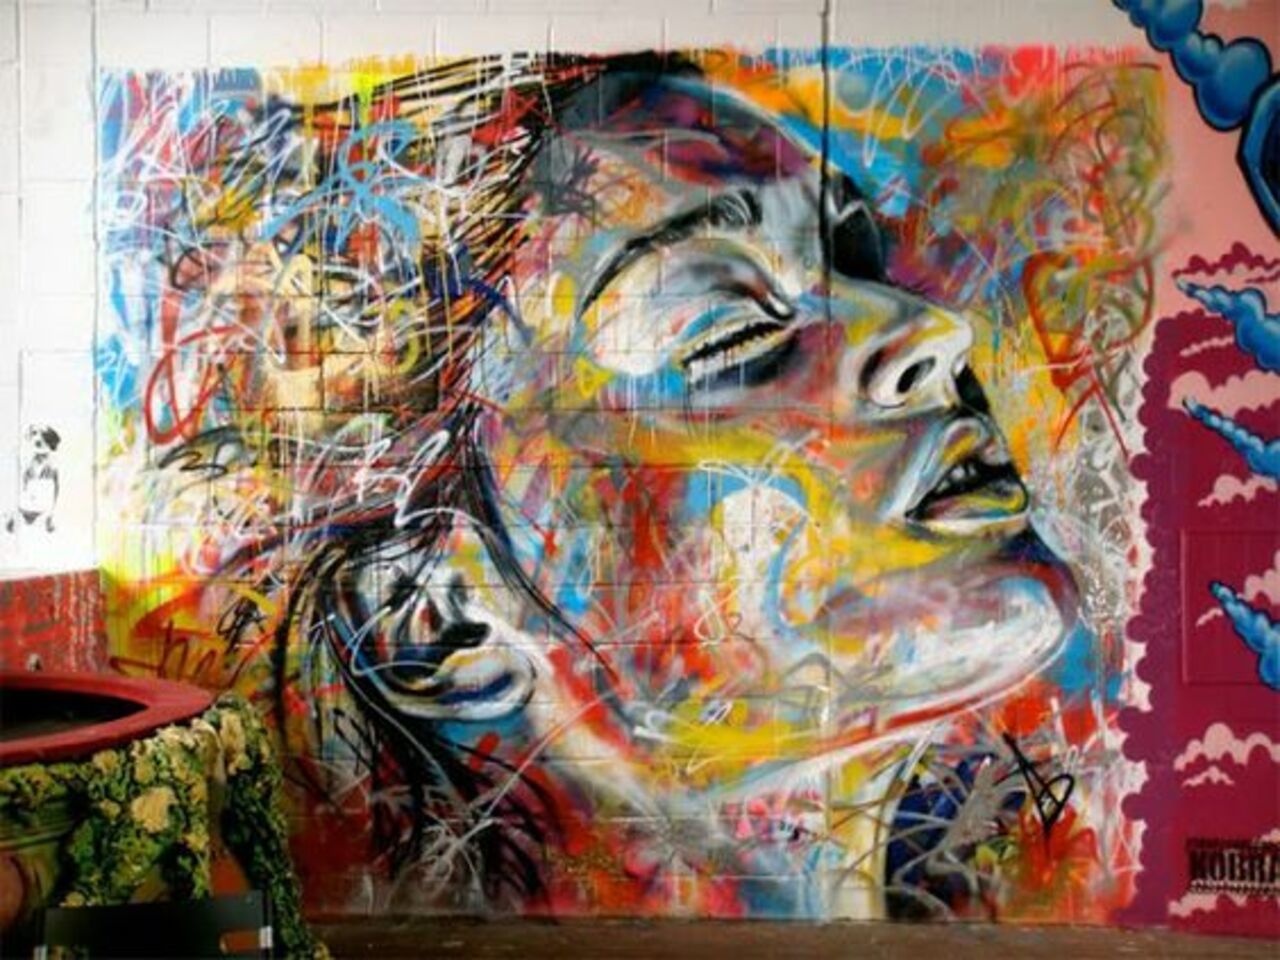 ... like closed eyes. Art by David Walker #StreetArt #Art #Eyes #Beauty #Colors #Graffiti #Mural #UrbanArt https://t.co/n95hlb1lCH